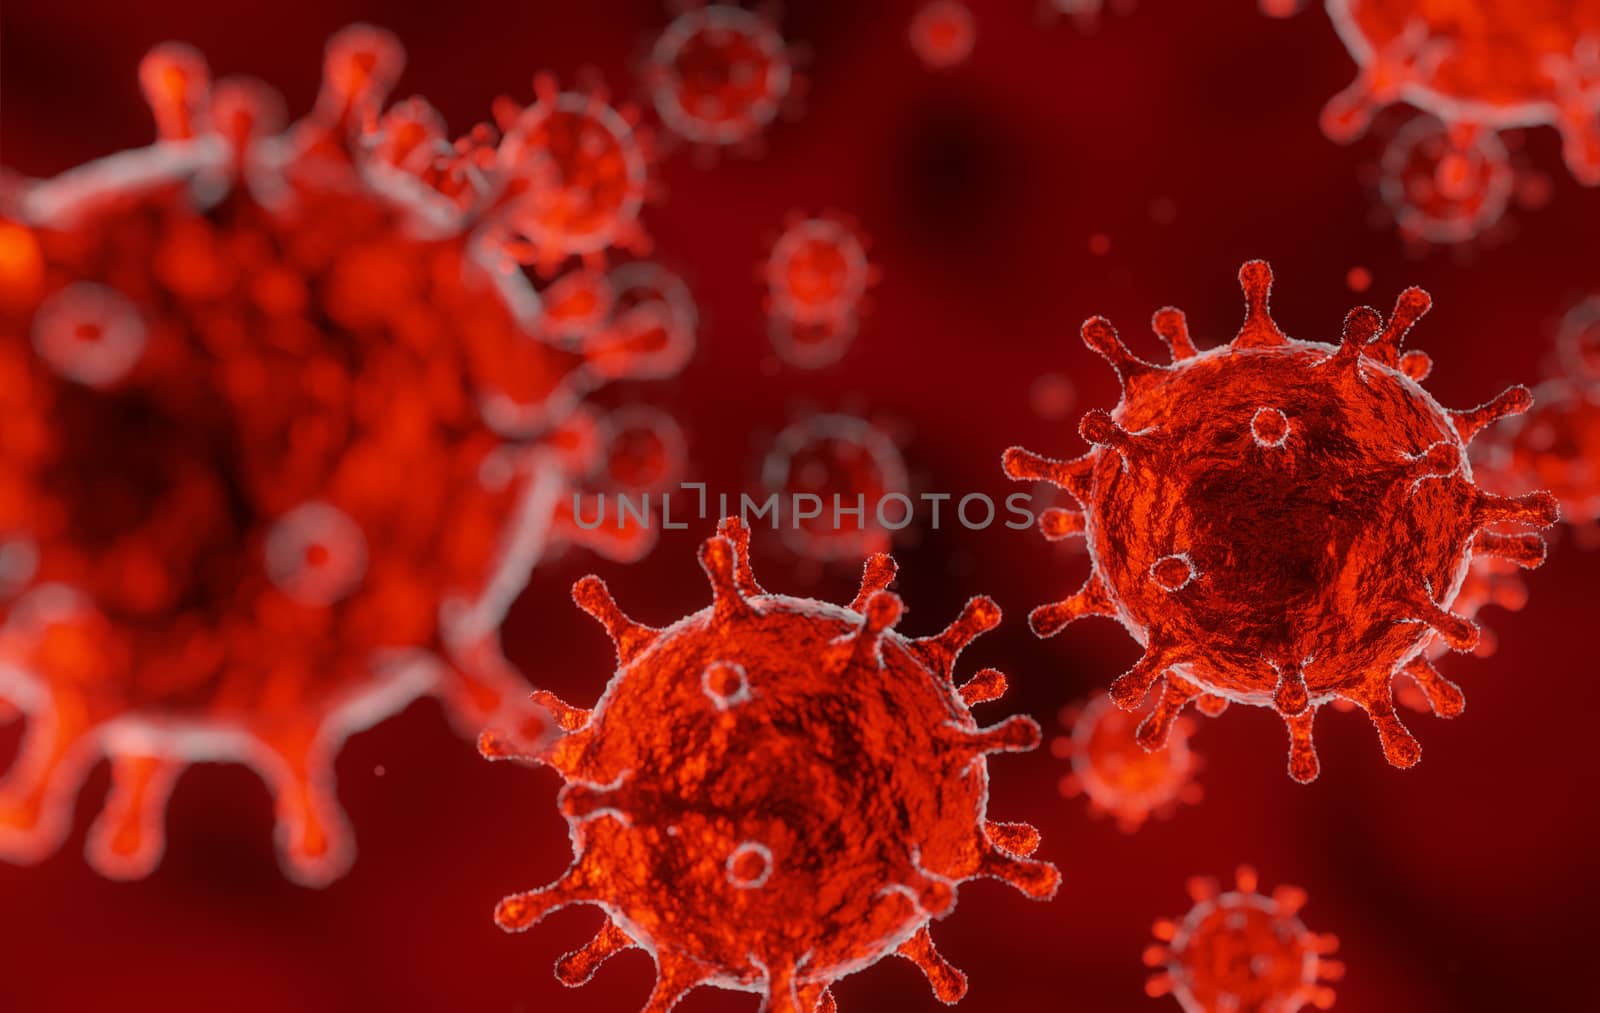 corona virus 2019-ncov flu outbreak, microscopic view of floating virus in red blood, coronavirus pandemic concept, 3D rendering medical background